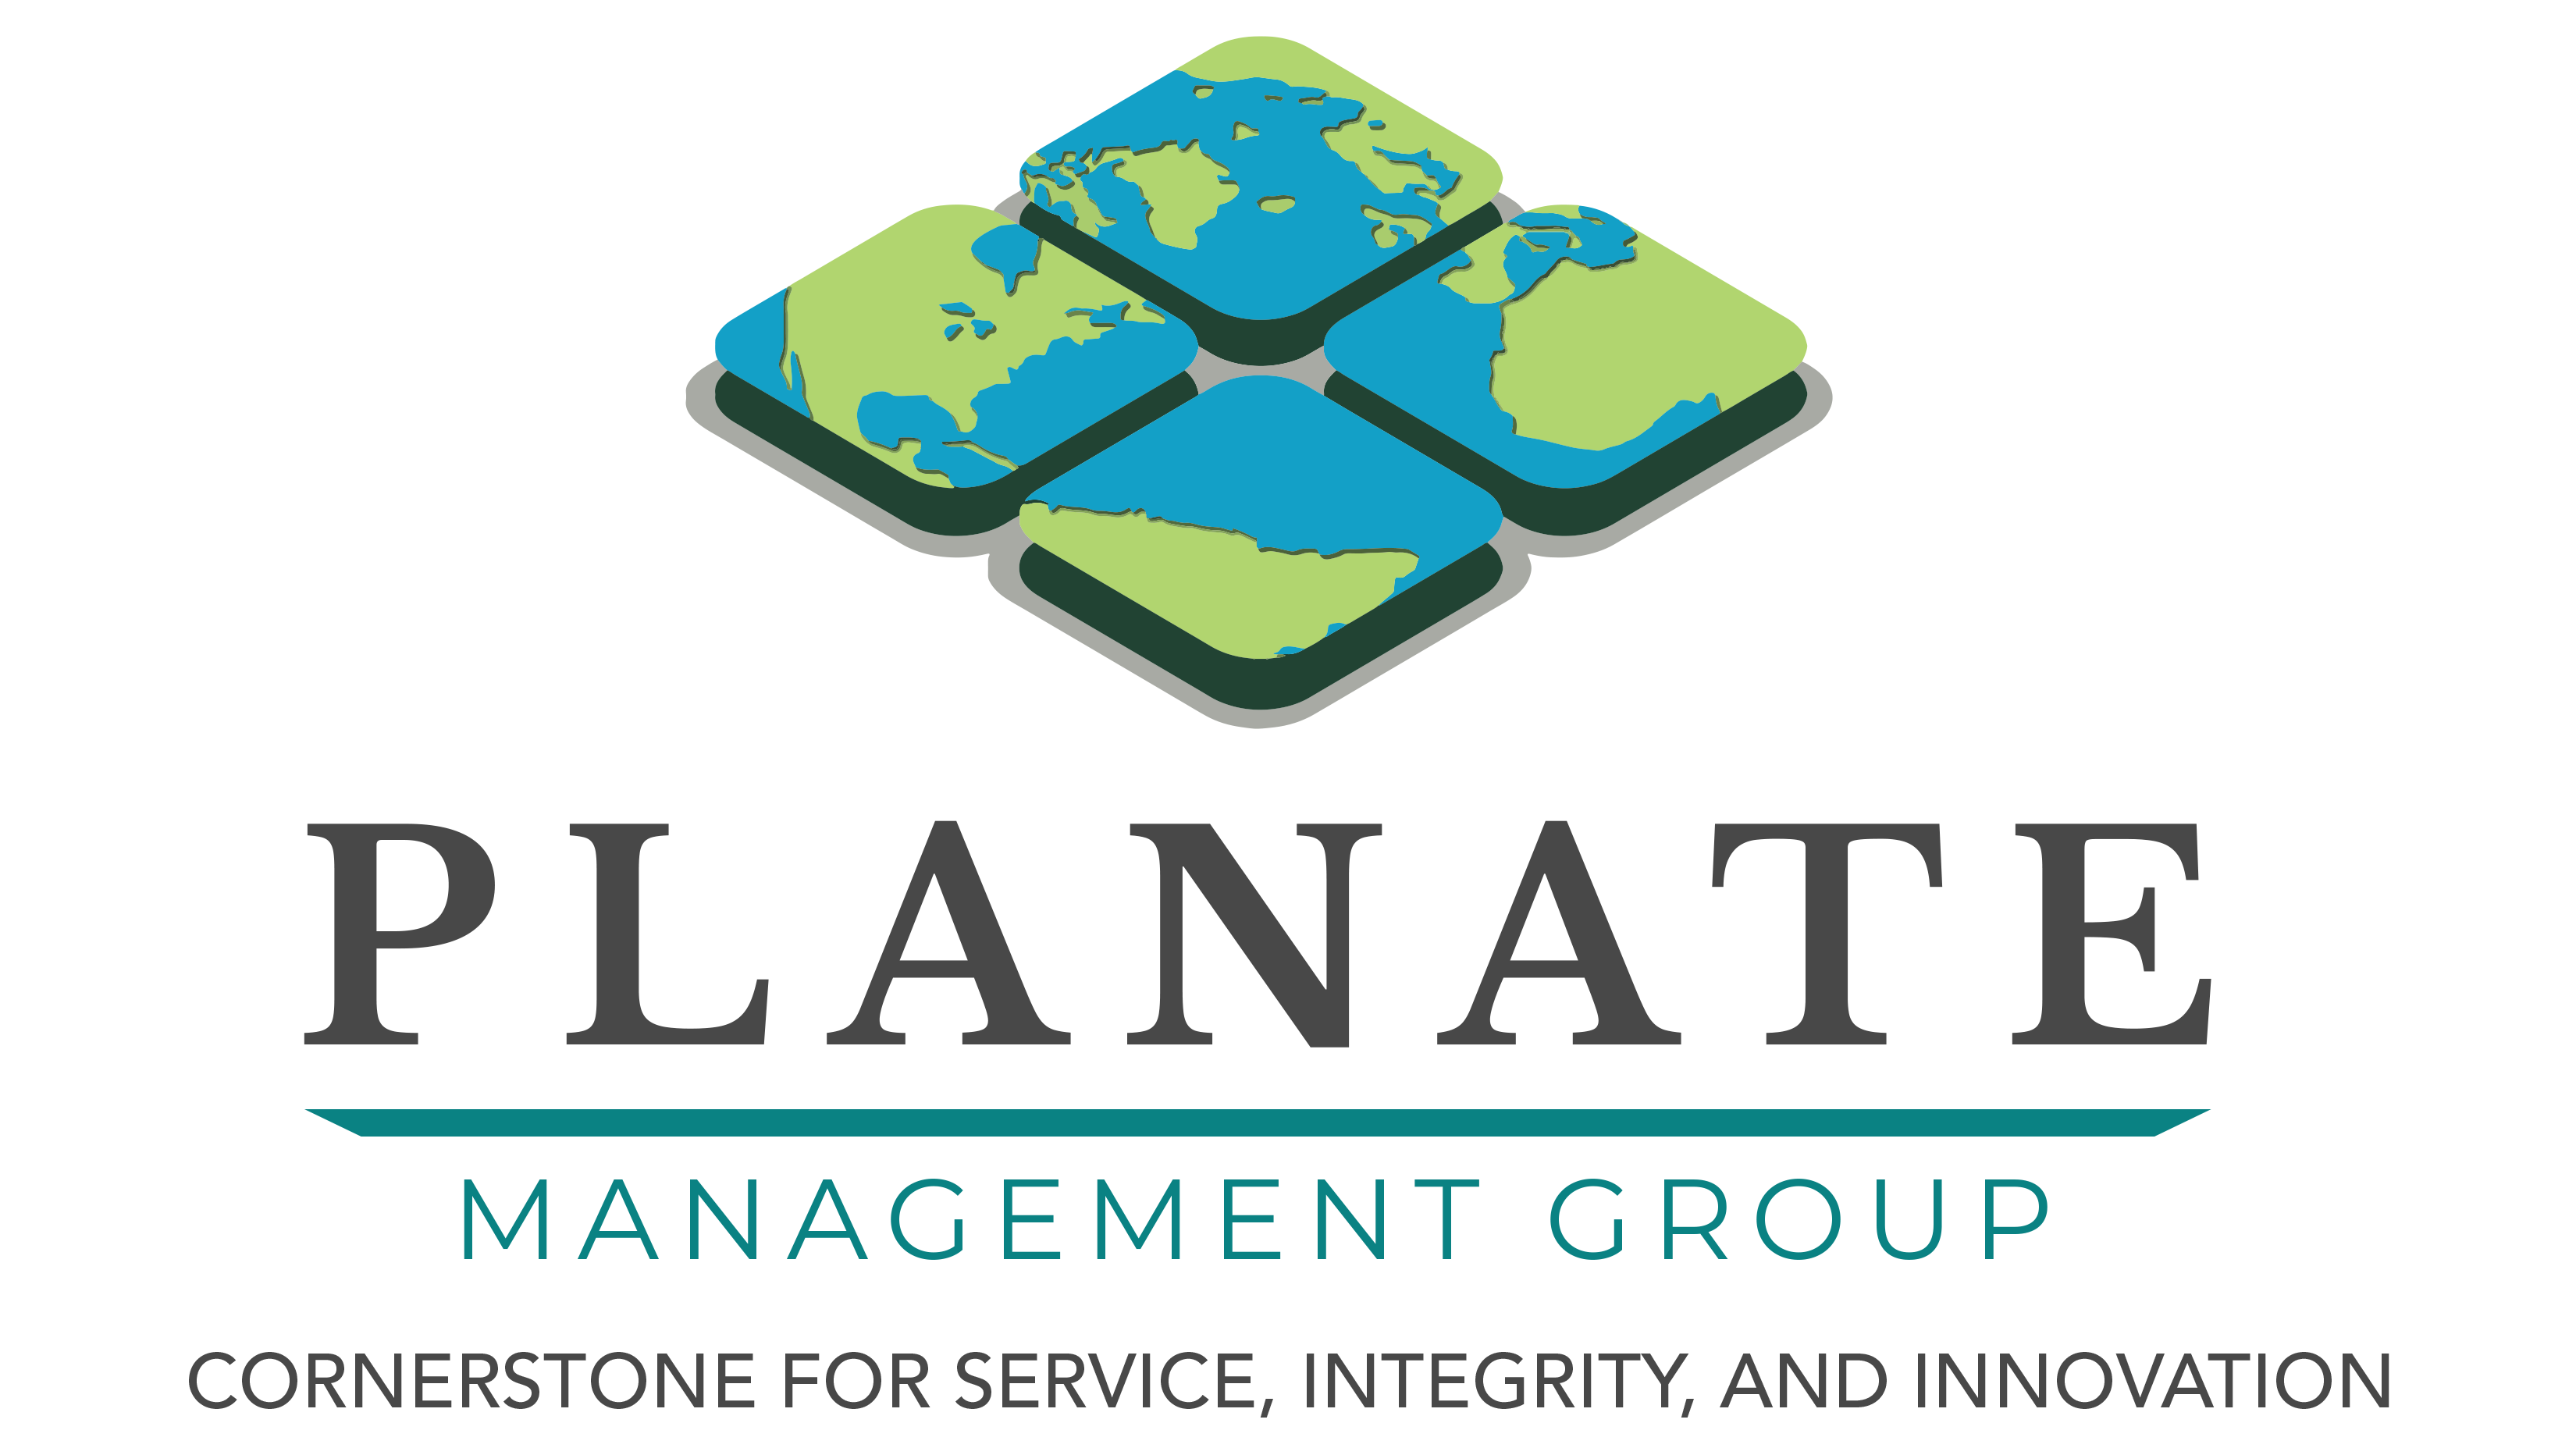 Planate Management Group